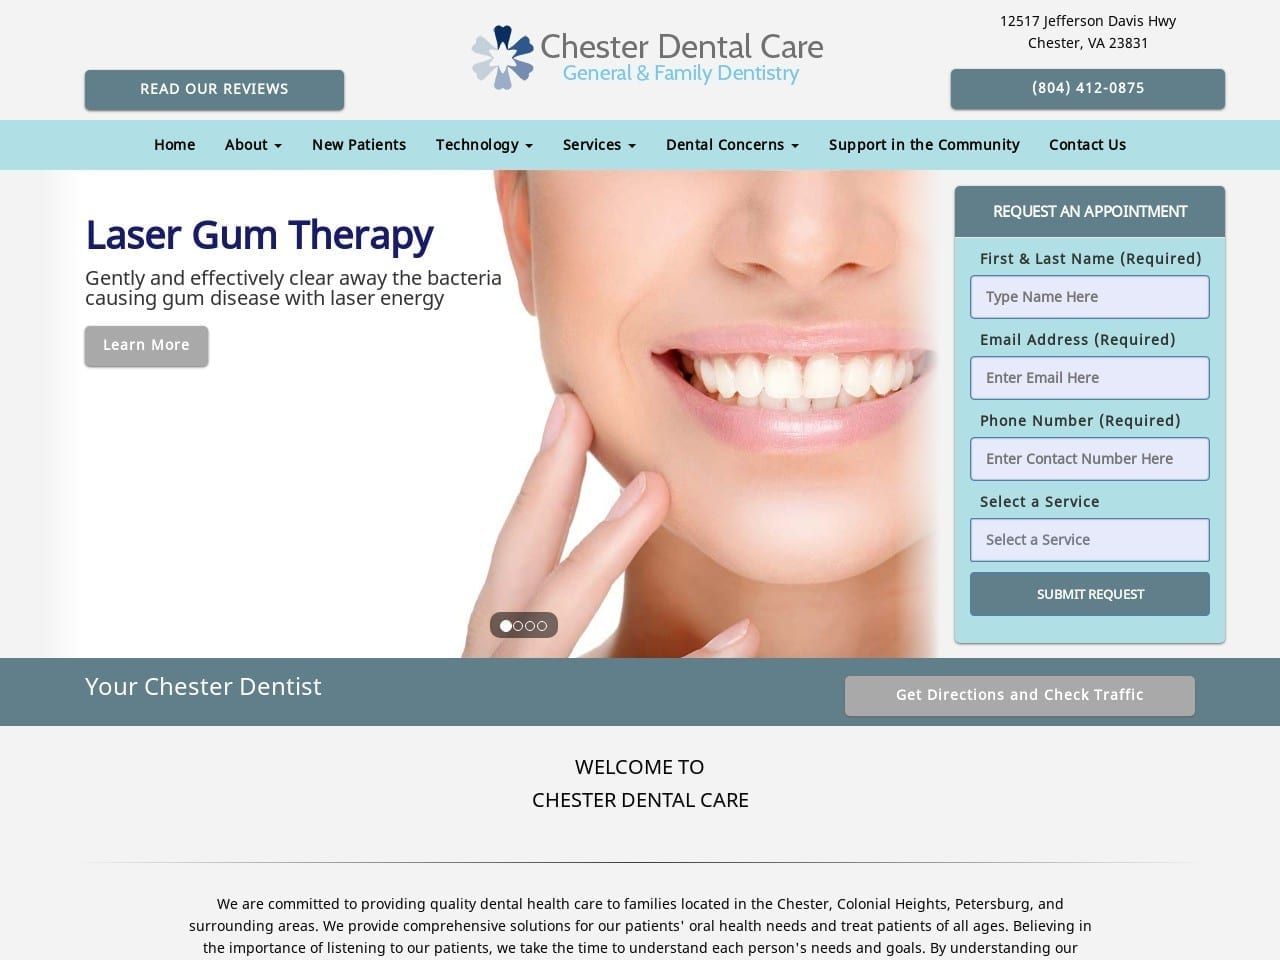 Chester Dental Careva Website Screenshot from chesterdentalcareva.com